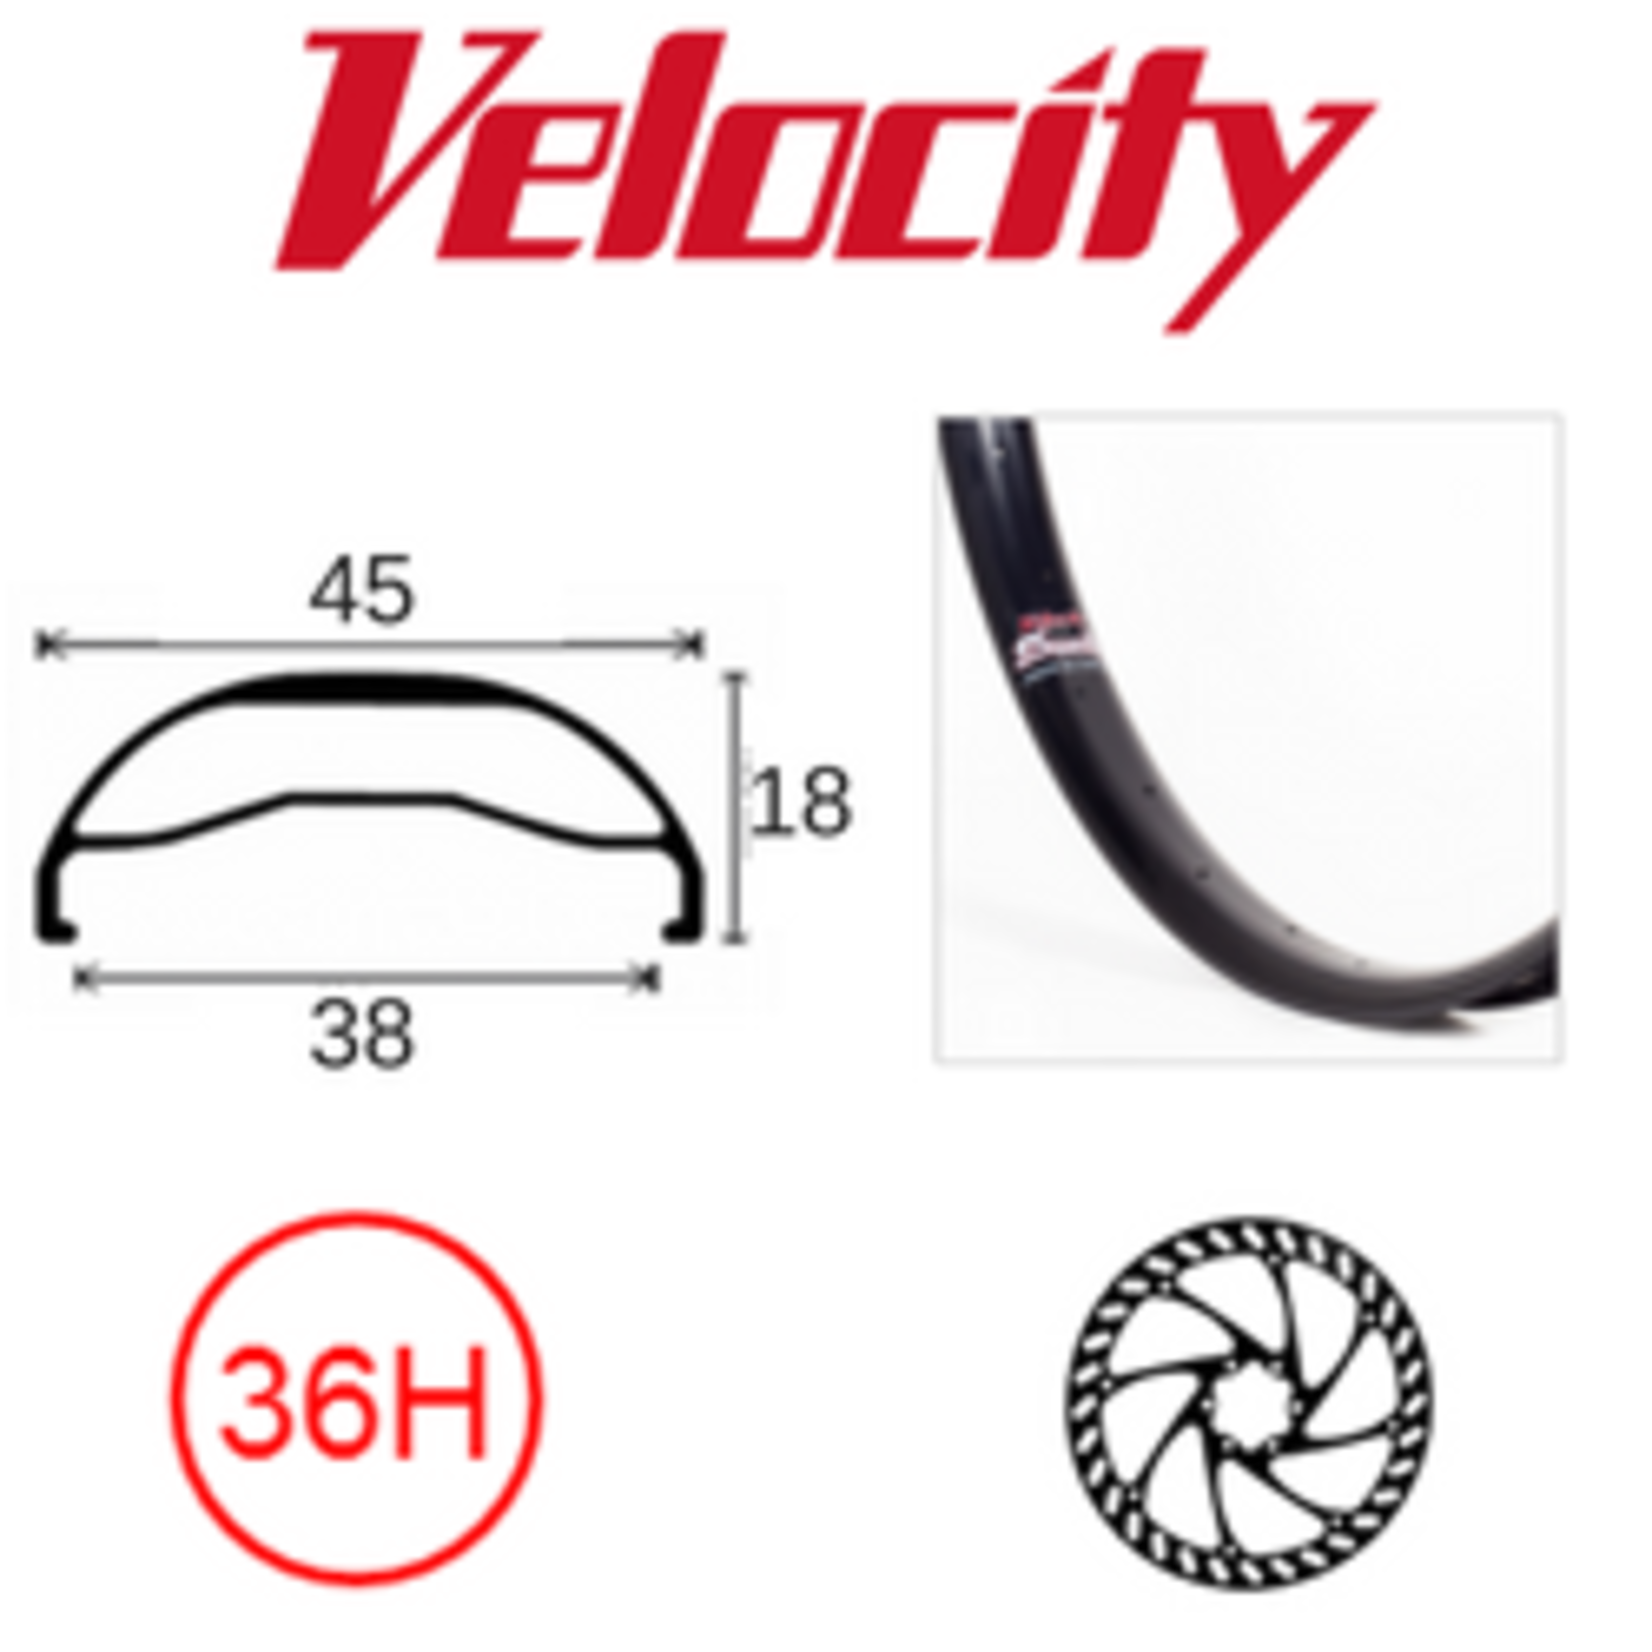 velocity Velocity Rim - Dually 700C/29ER Alloy Rim Wide (45mm) Mid Fat Type 36H - Black